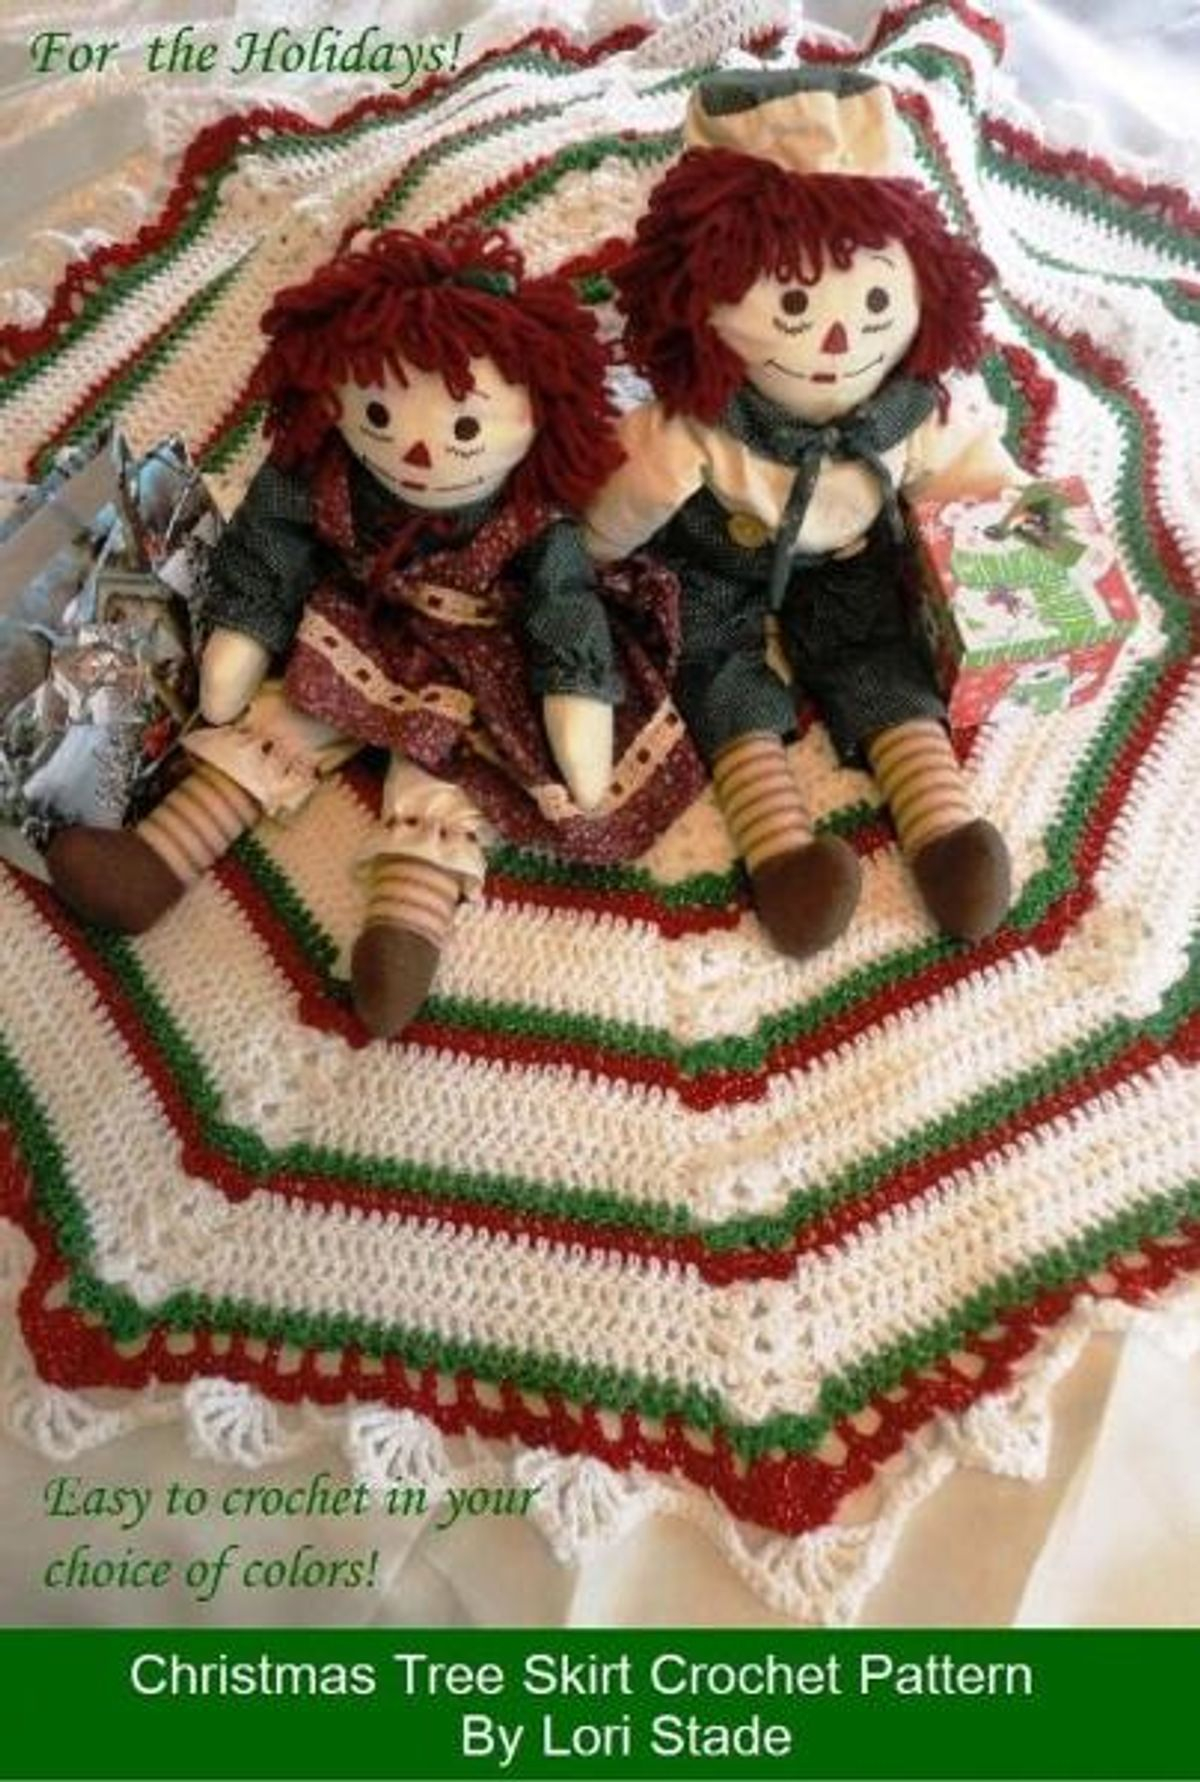 Crochet Tree Skirt Pattern Christmas Tree Skirt Crochet Pattern Ebook Lori Stade Rakuten Kobo